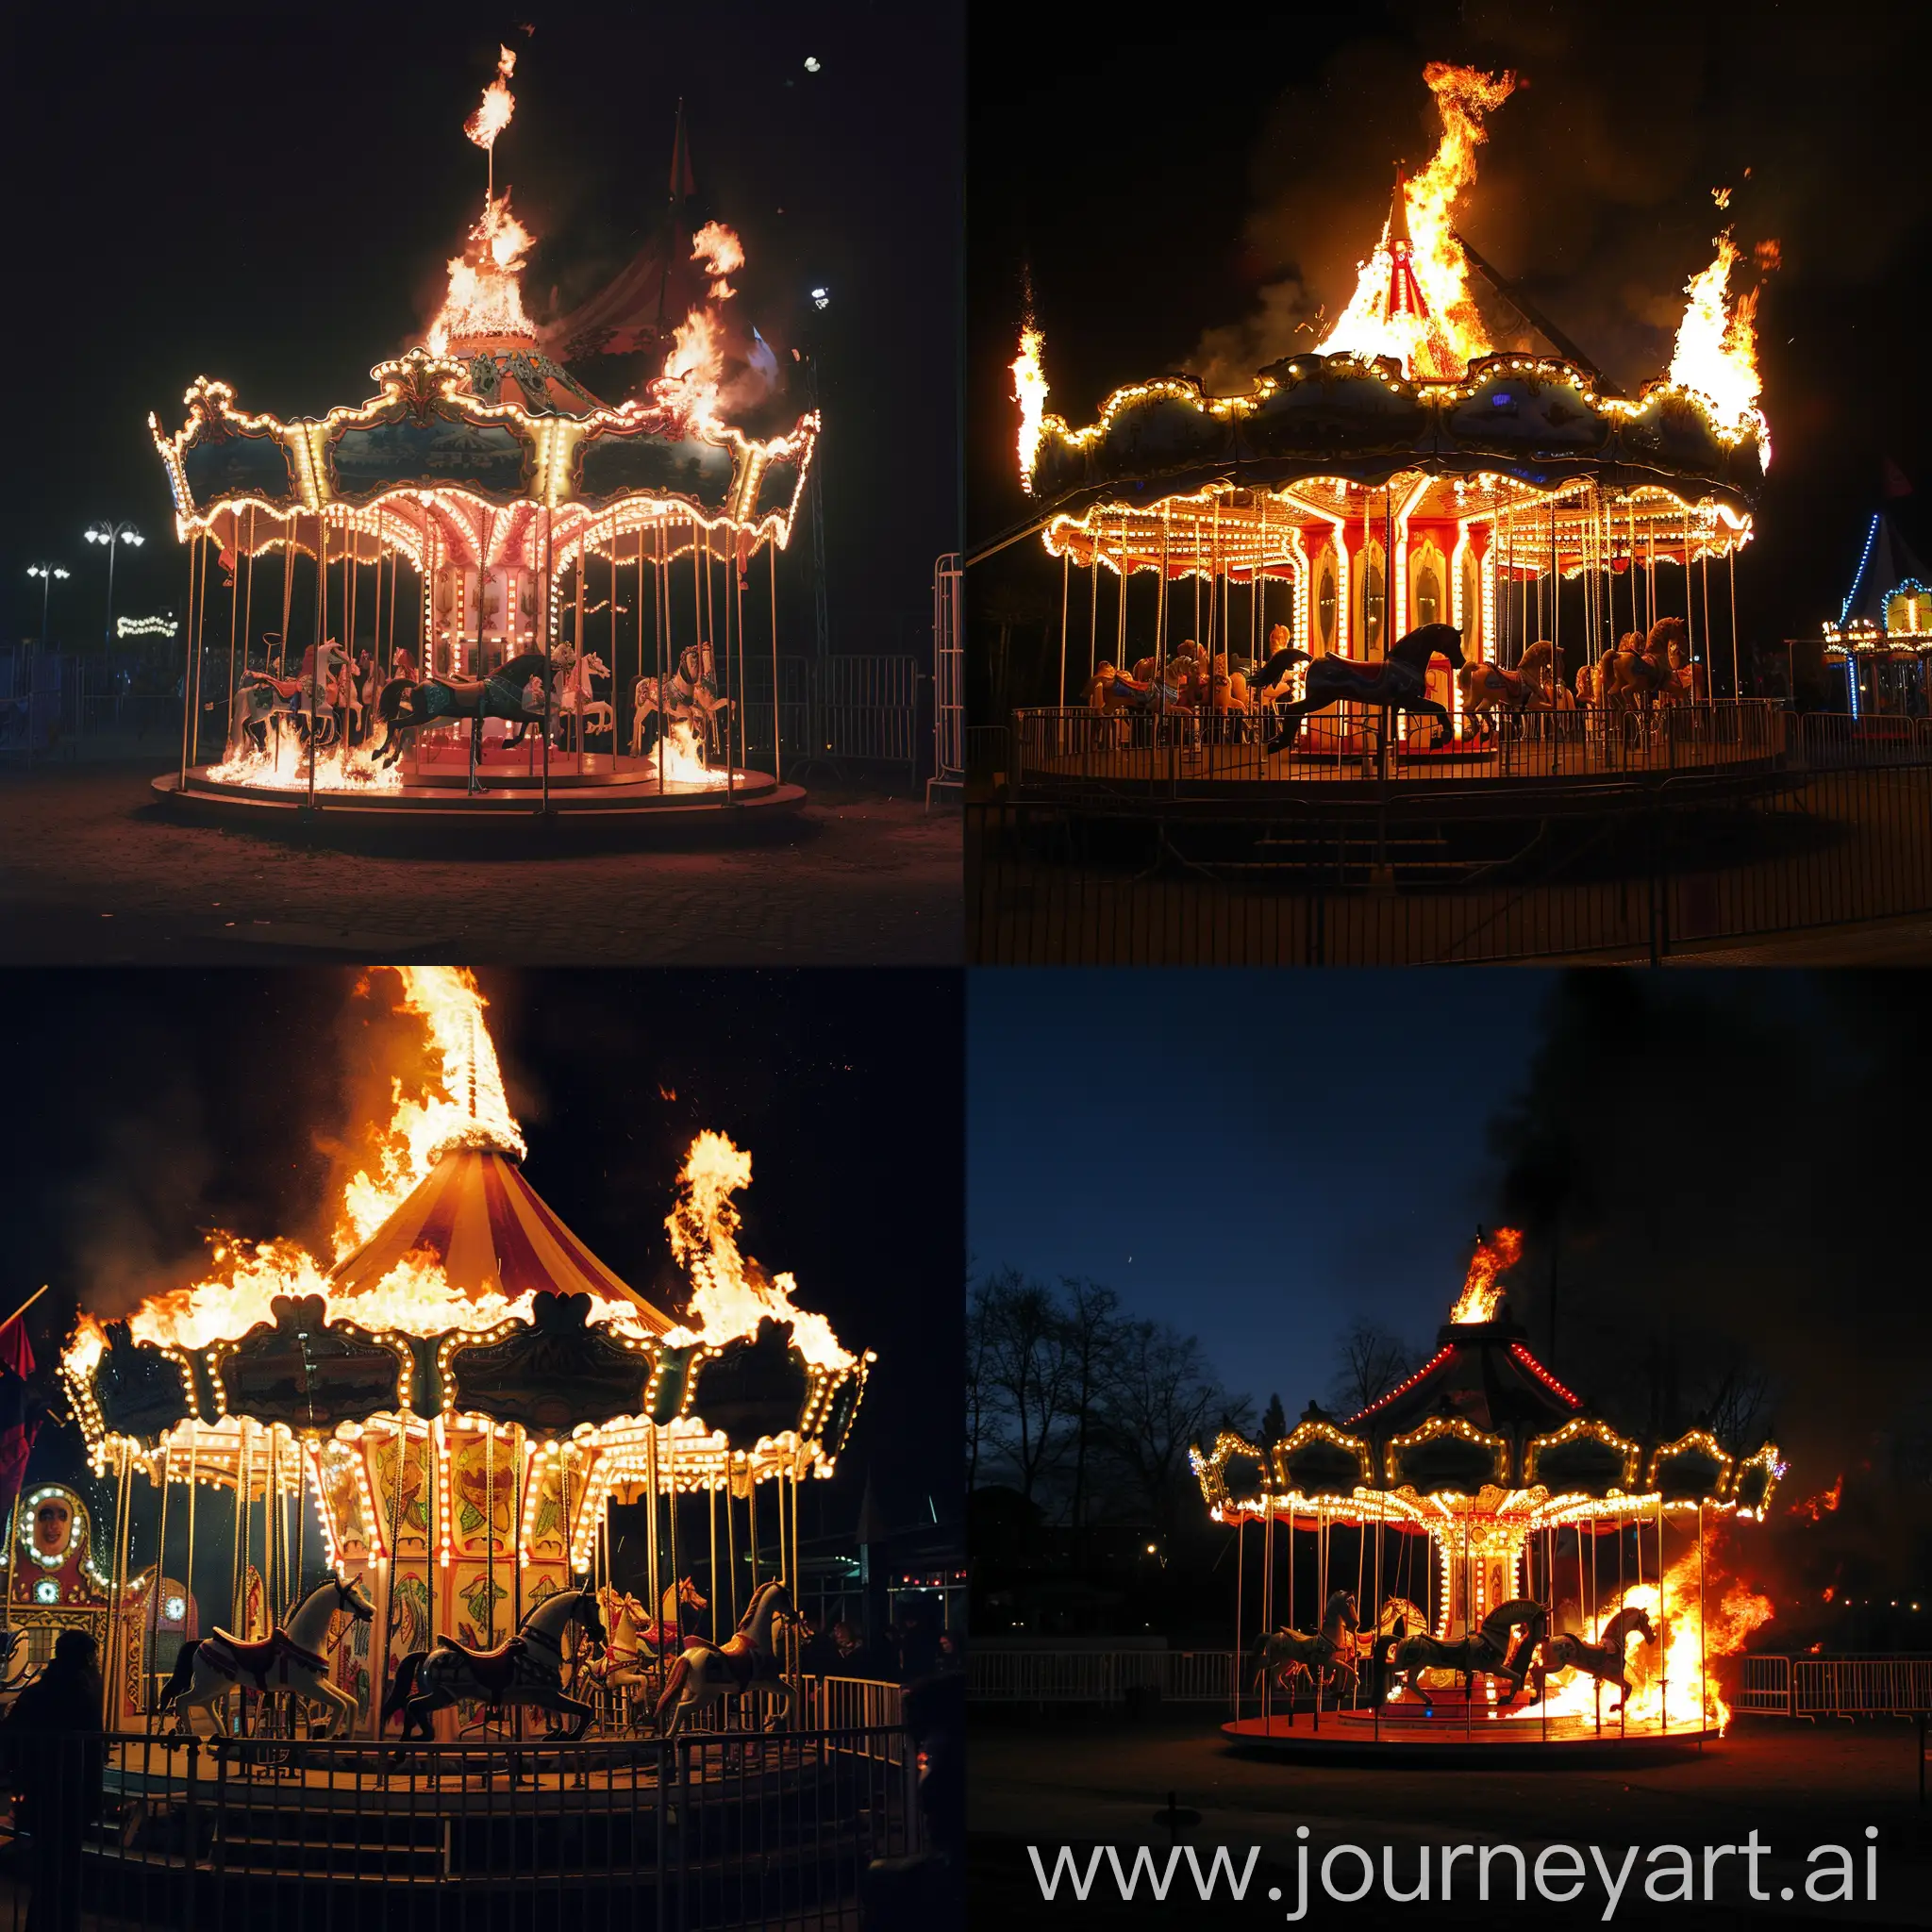 Nighttime-Carousel-Blaze-Fiery-Spectacle-Illuminates-the-Dark